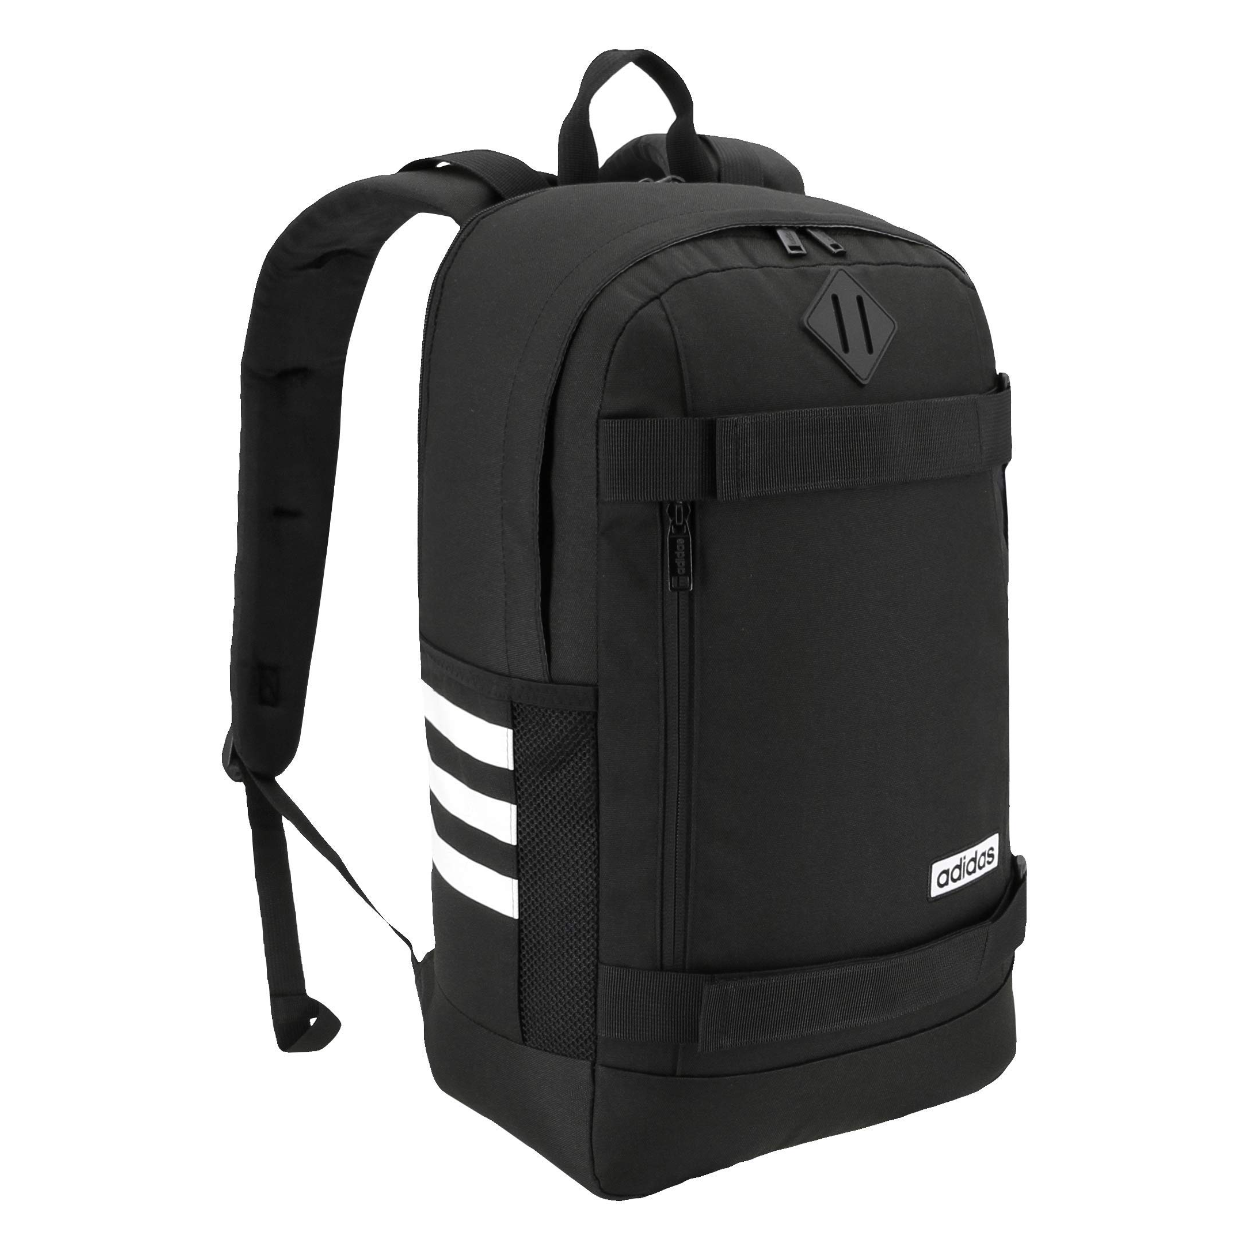 Adidas Kelton Backpack